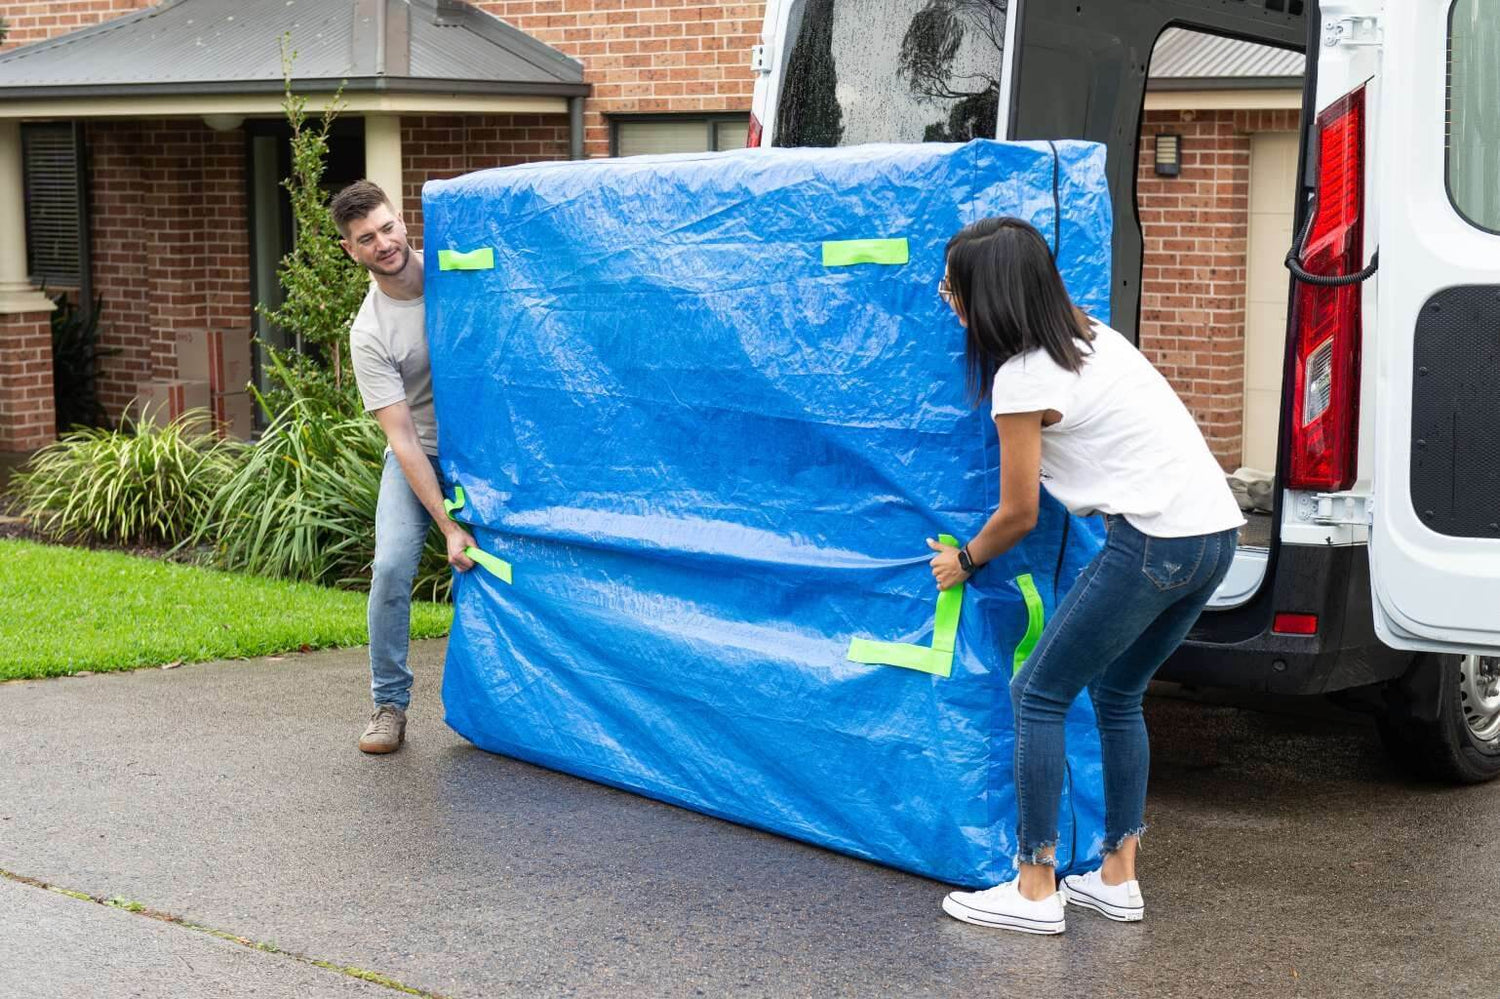 Moving storage mattress plastic cover